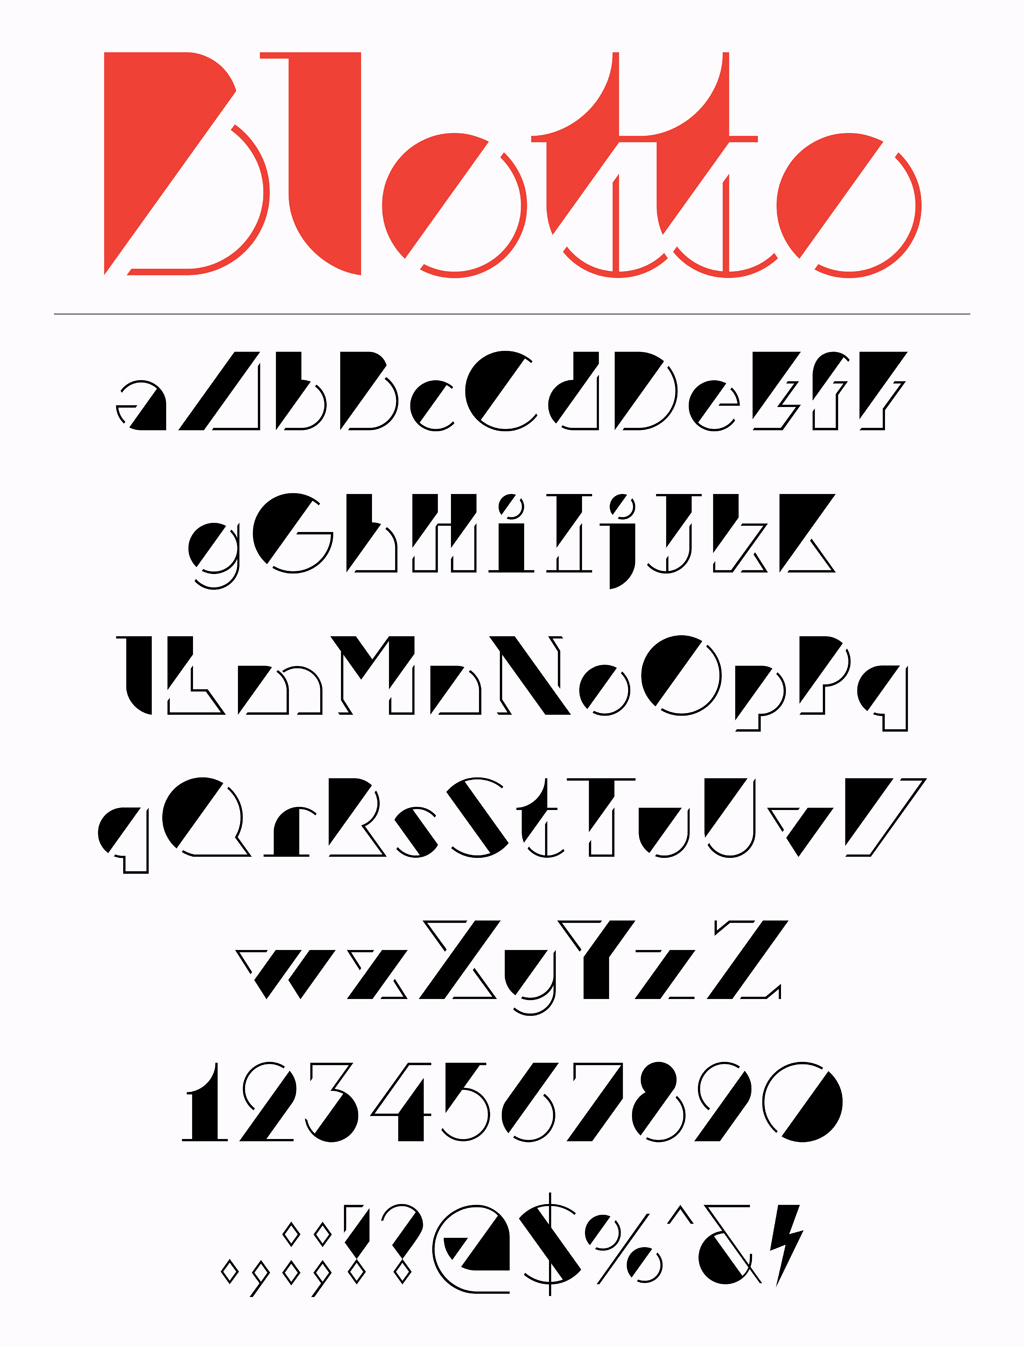 Digital typeface, 2013–2014